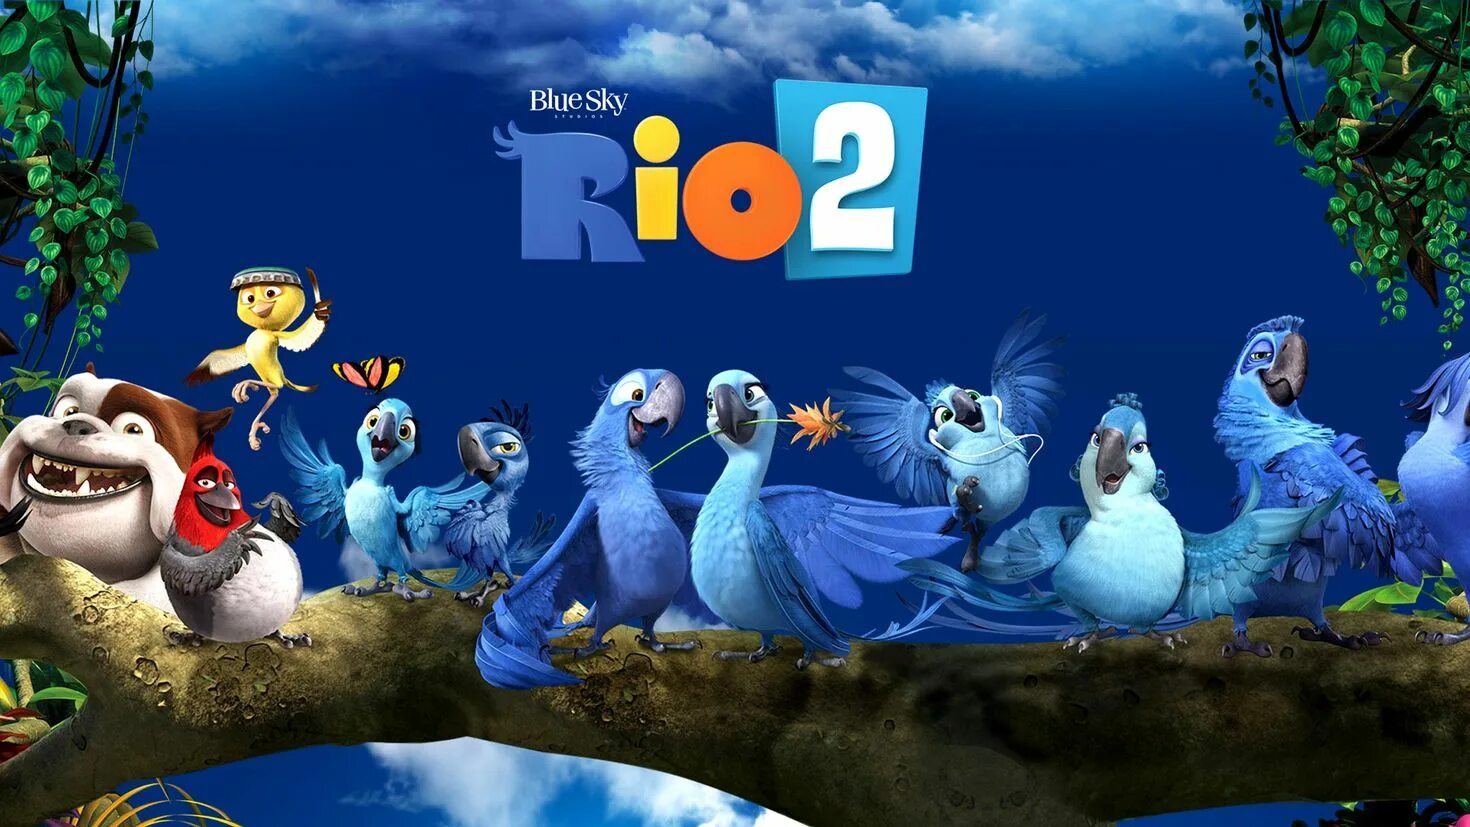 Рио 2 [Rio 2] (2014). Rio movie